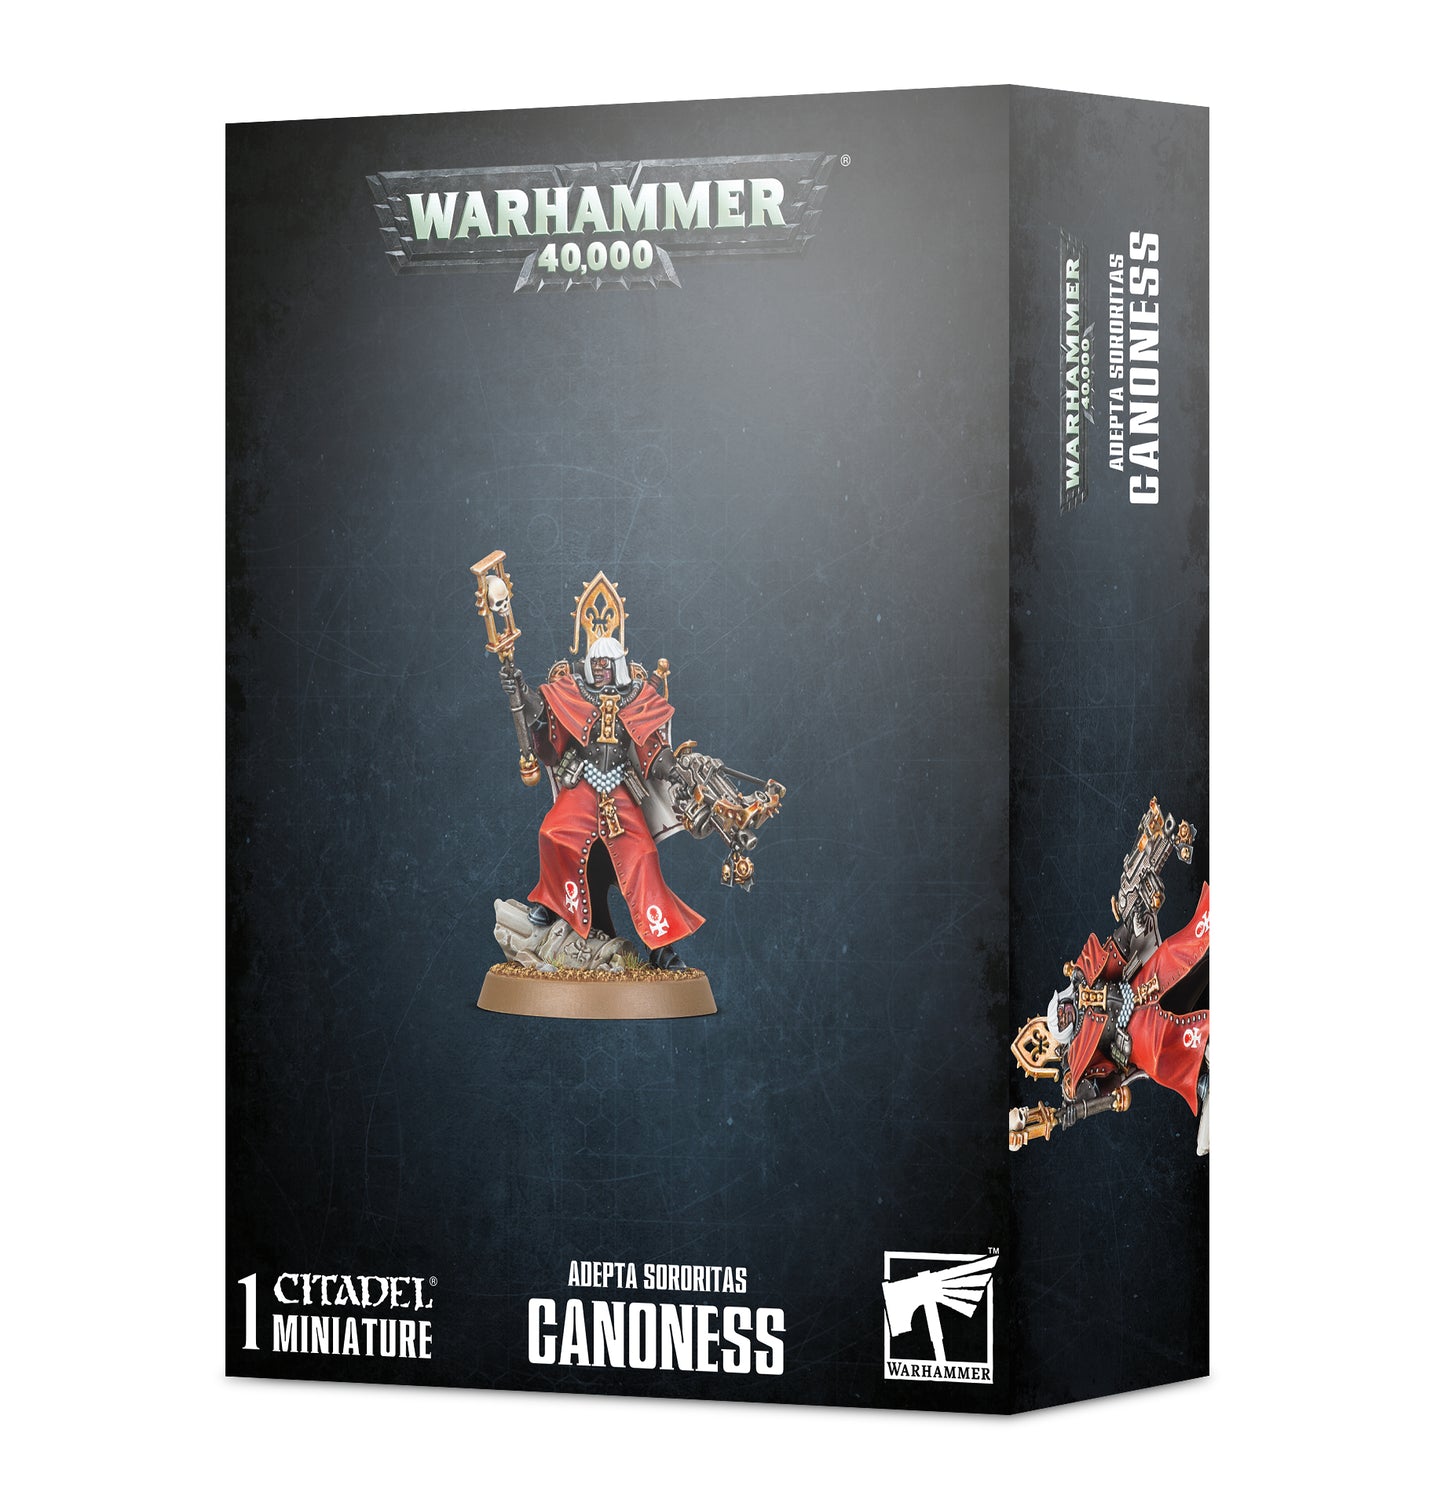 Warhammer 40000: Adepta Sororitas Canoness